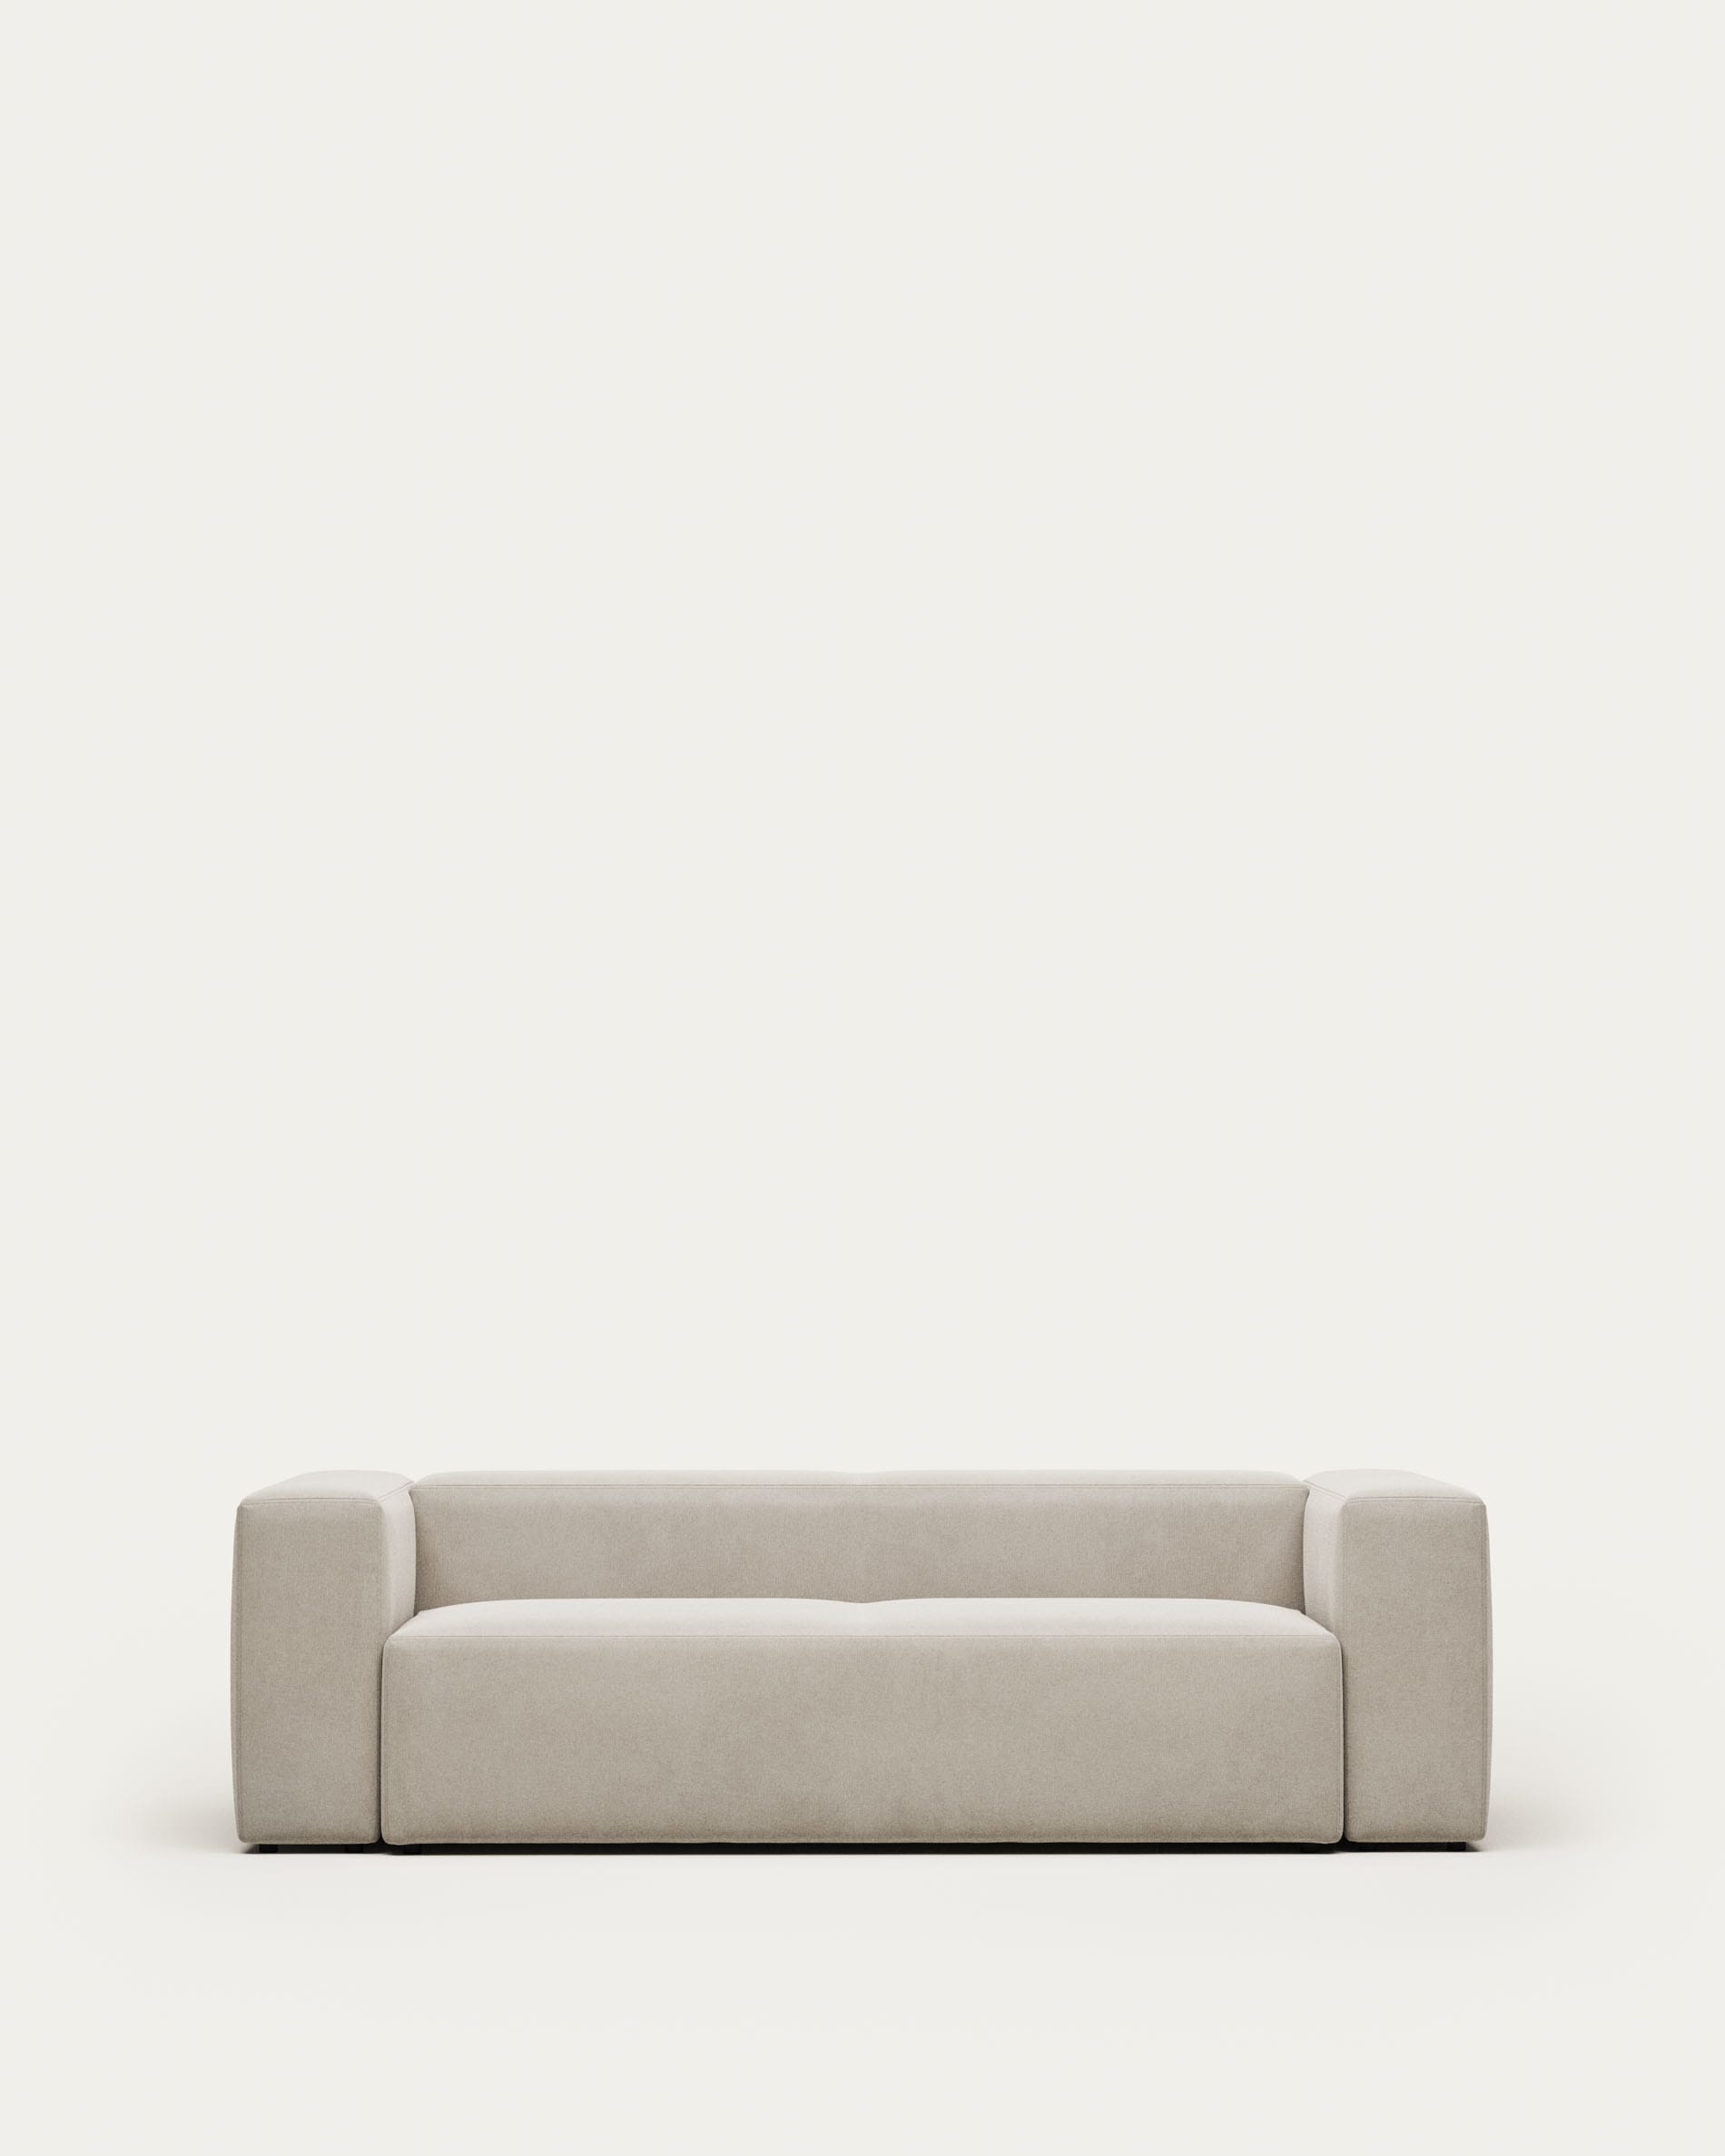 Blok 3 seater sofa in beige, 240 cm